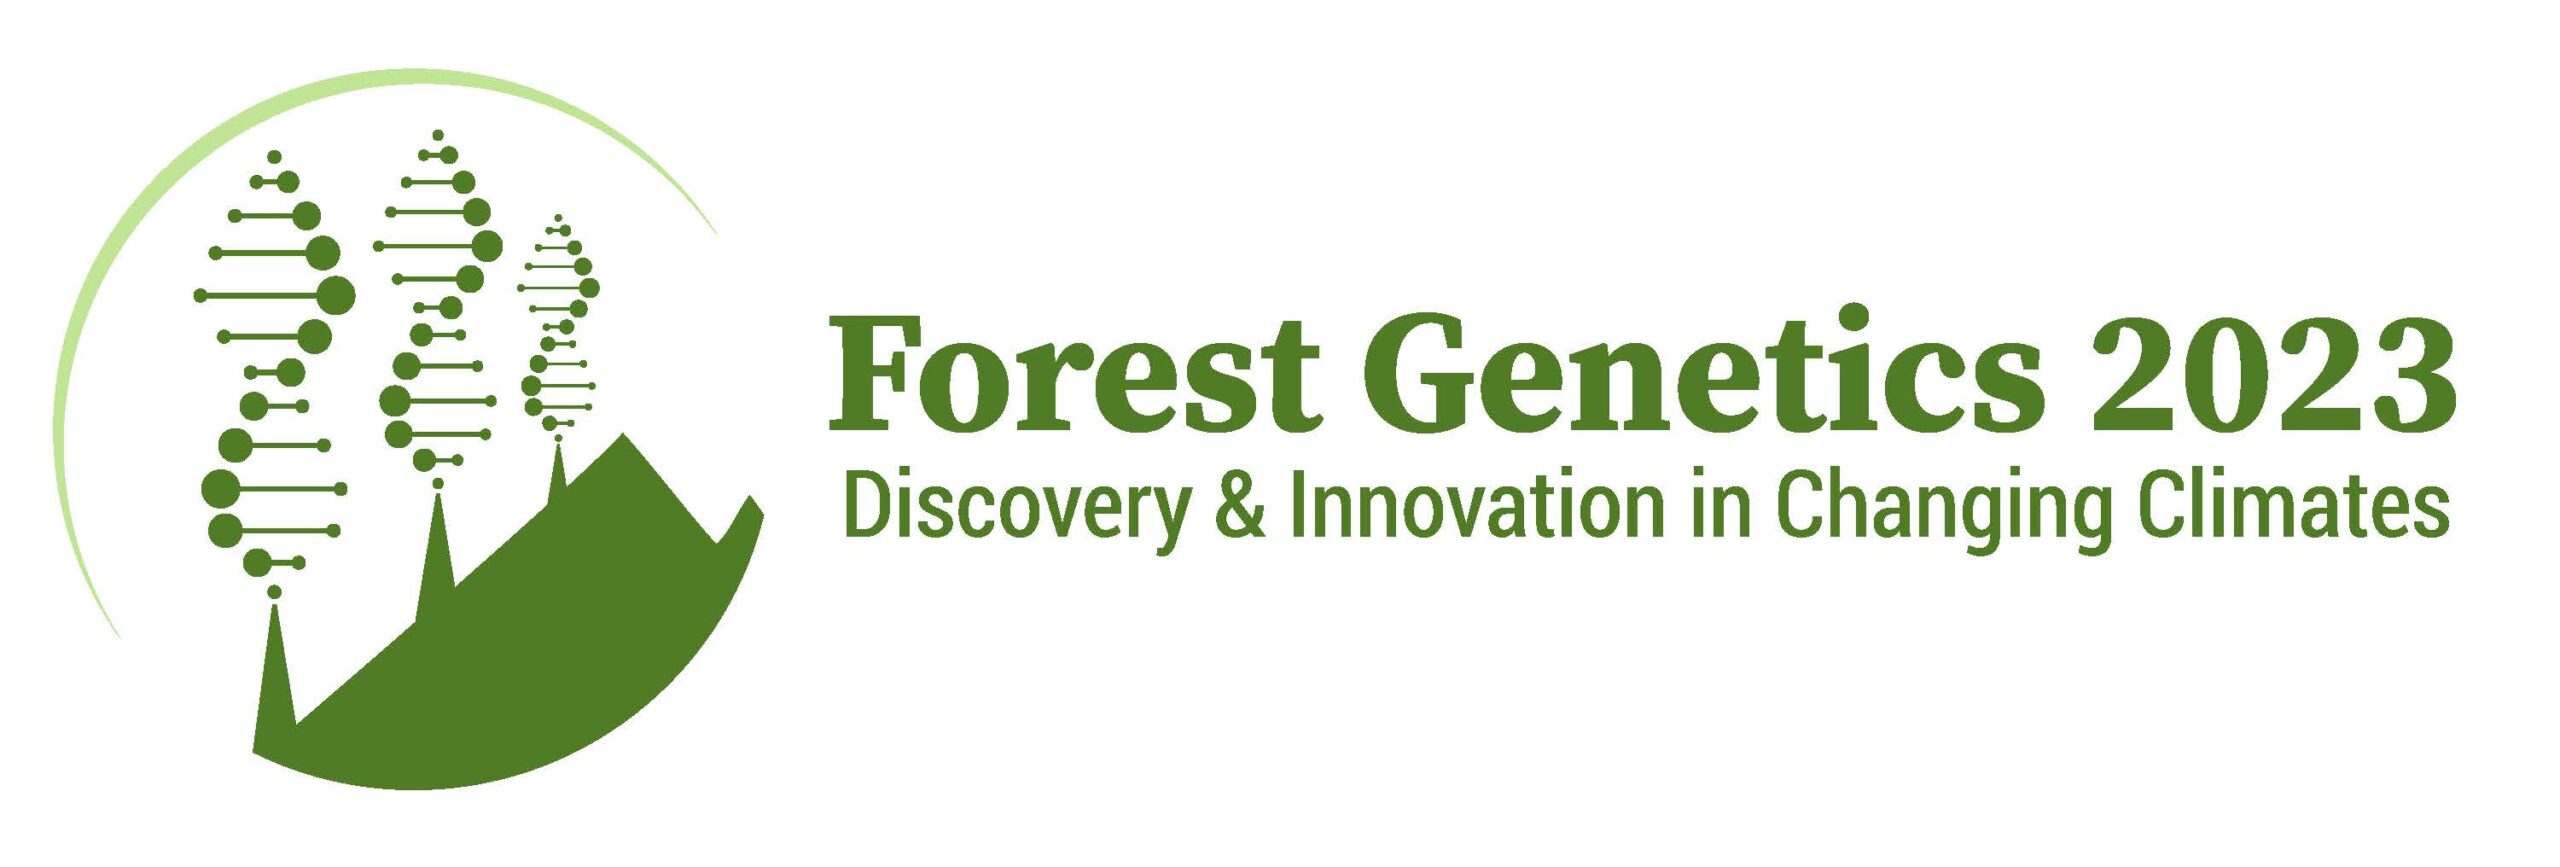 Forest Genetics 2023